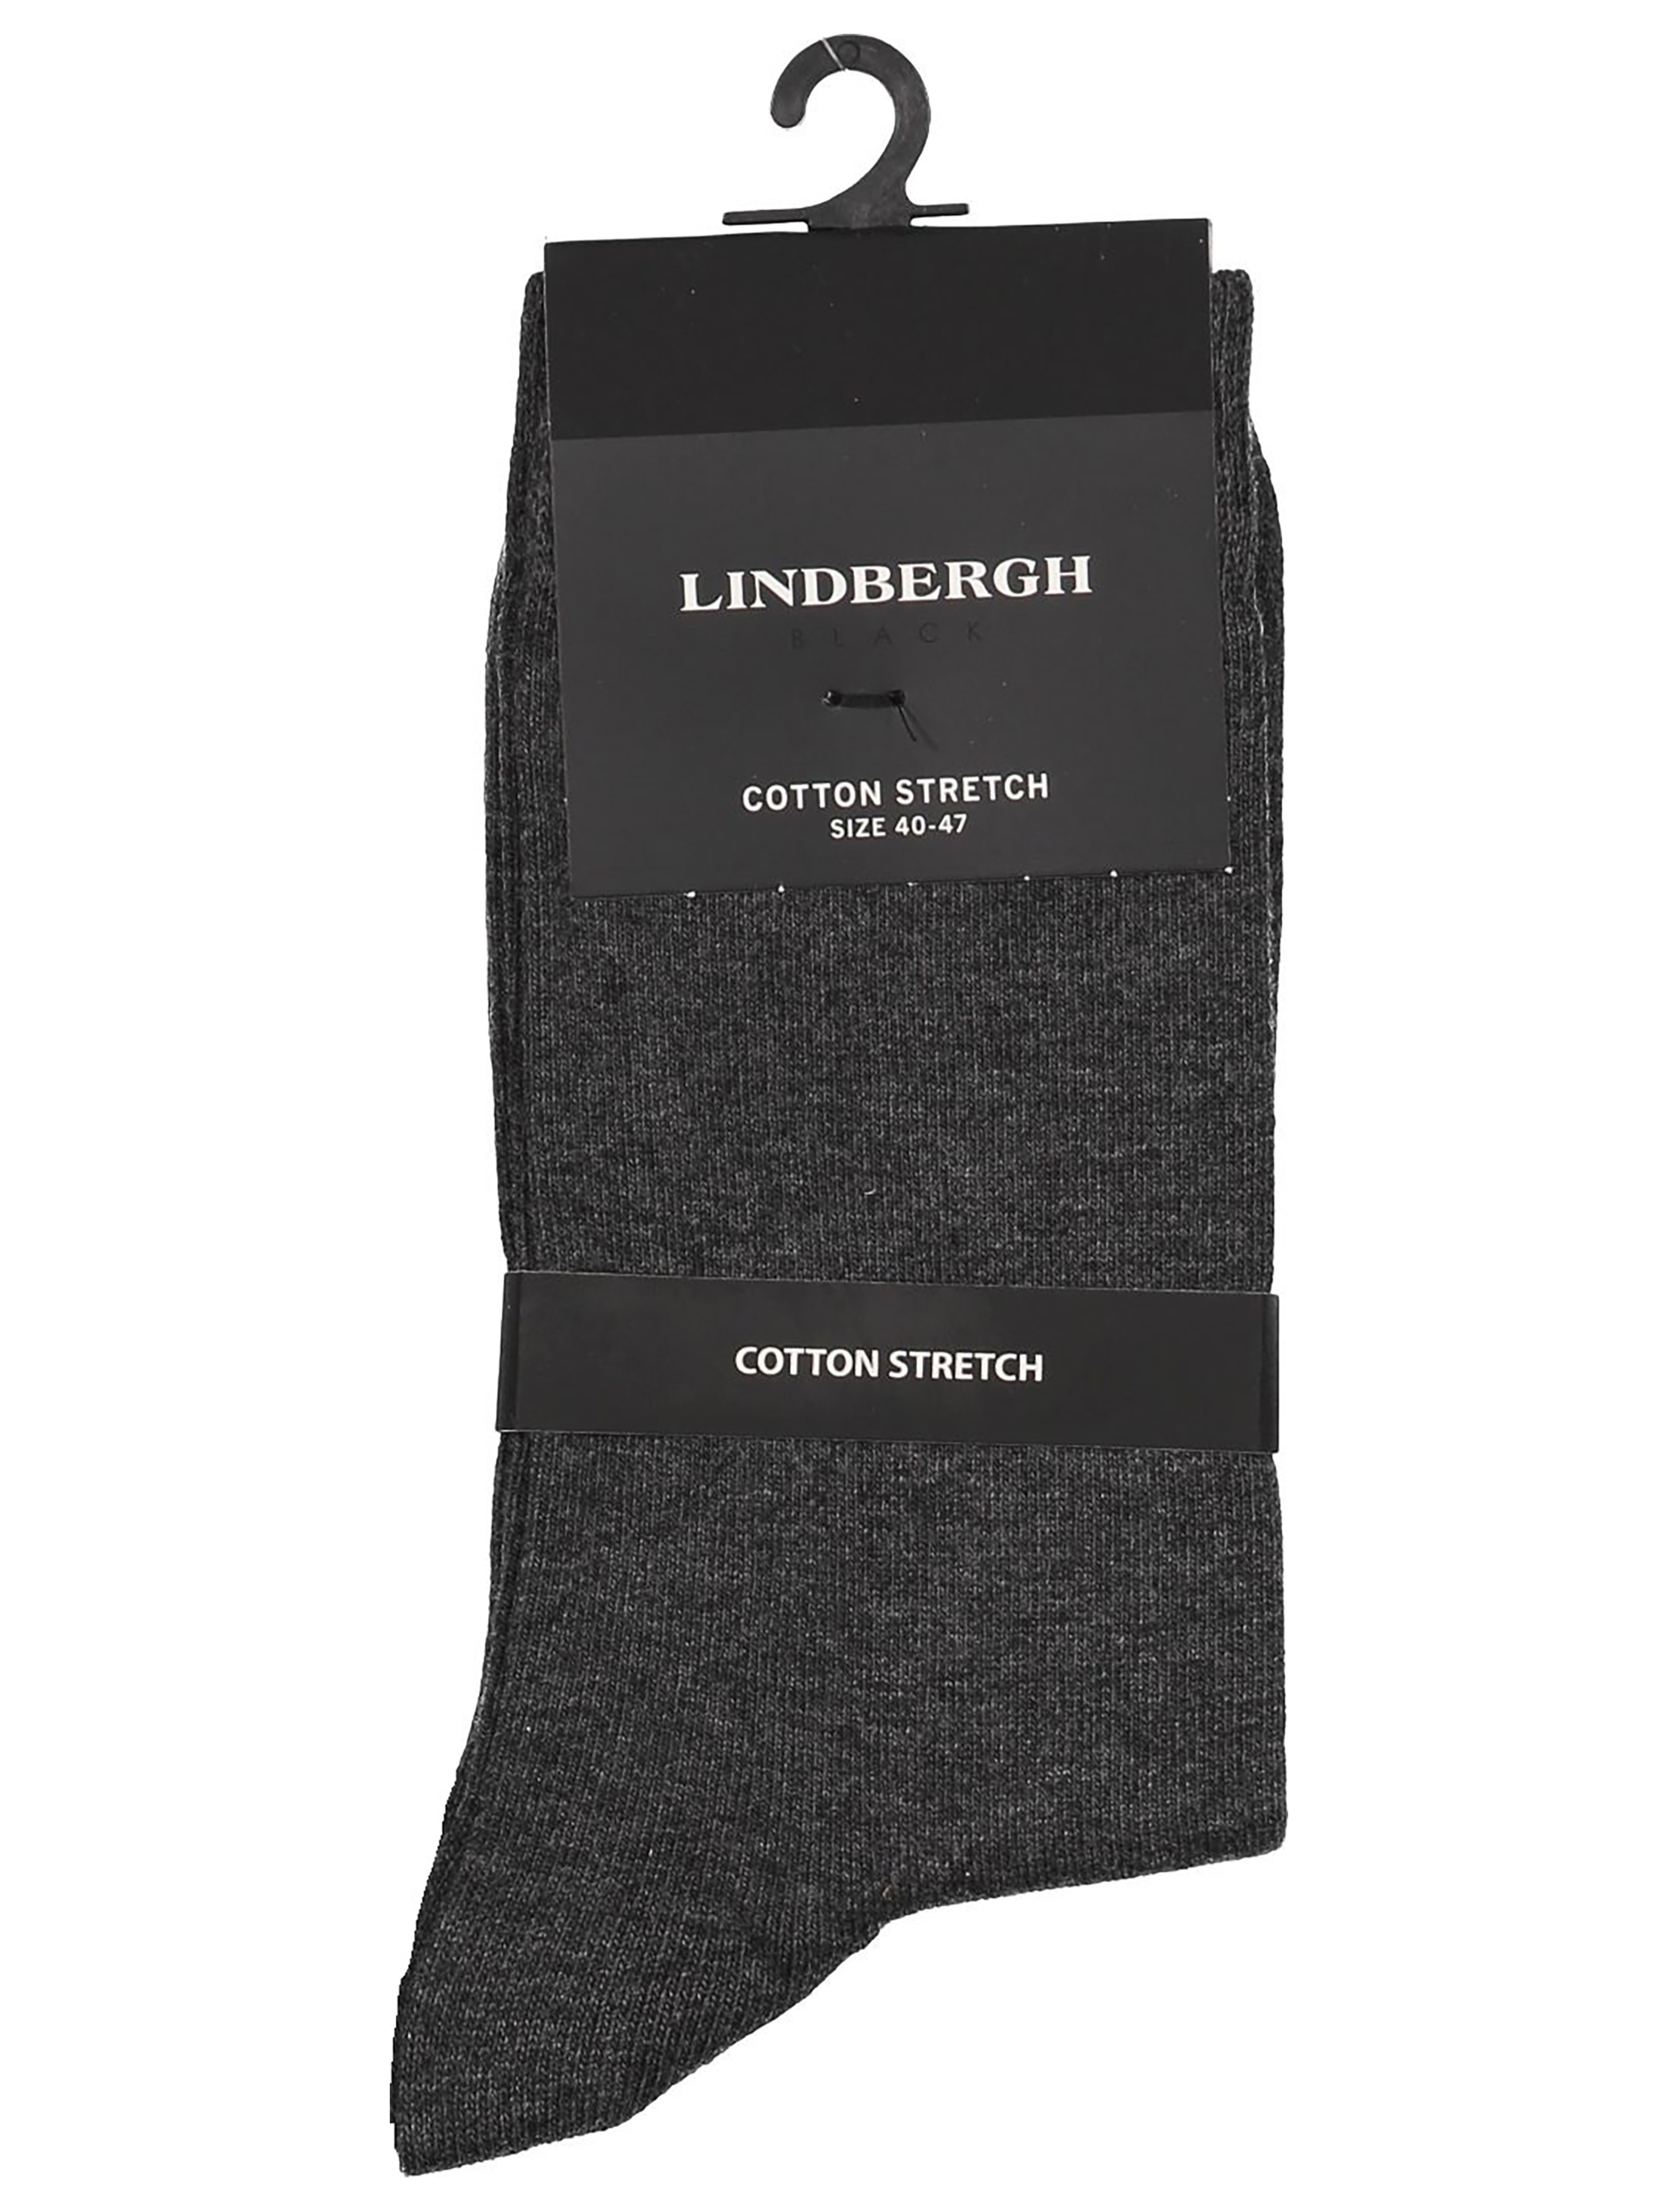 Lindbergh Socken grau / charcoal mel